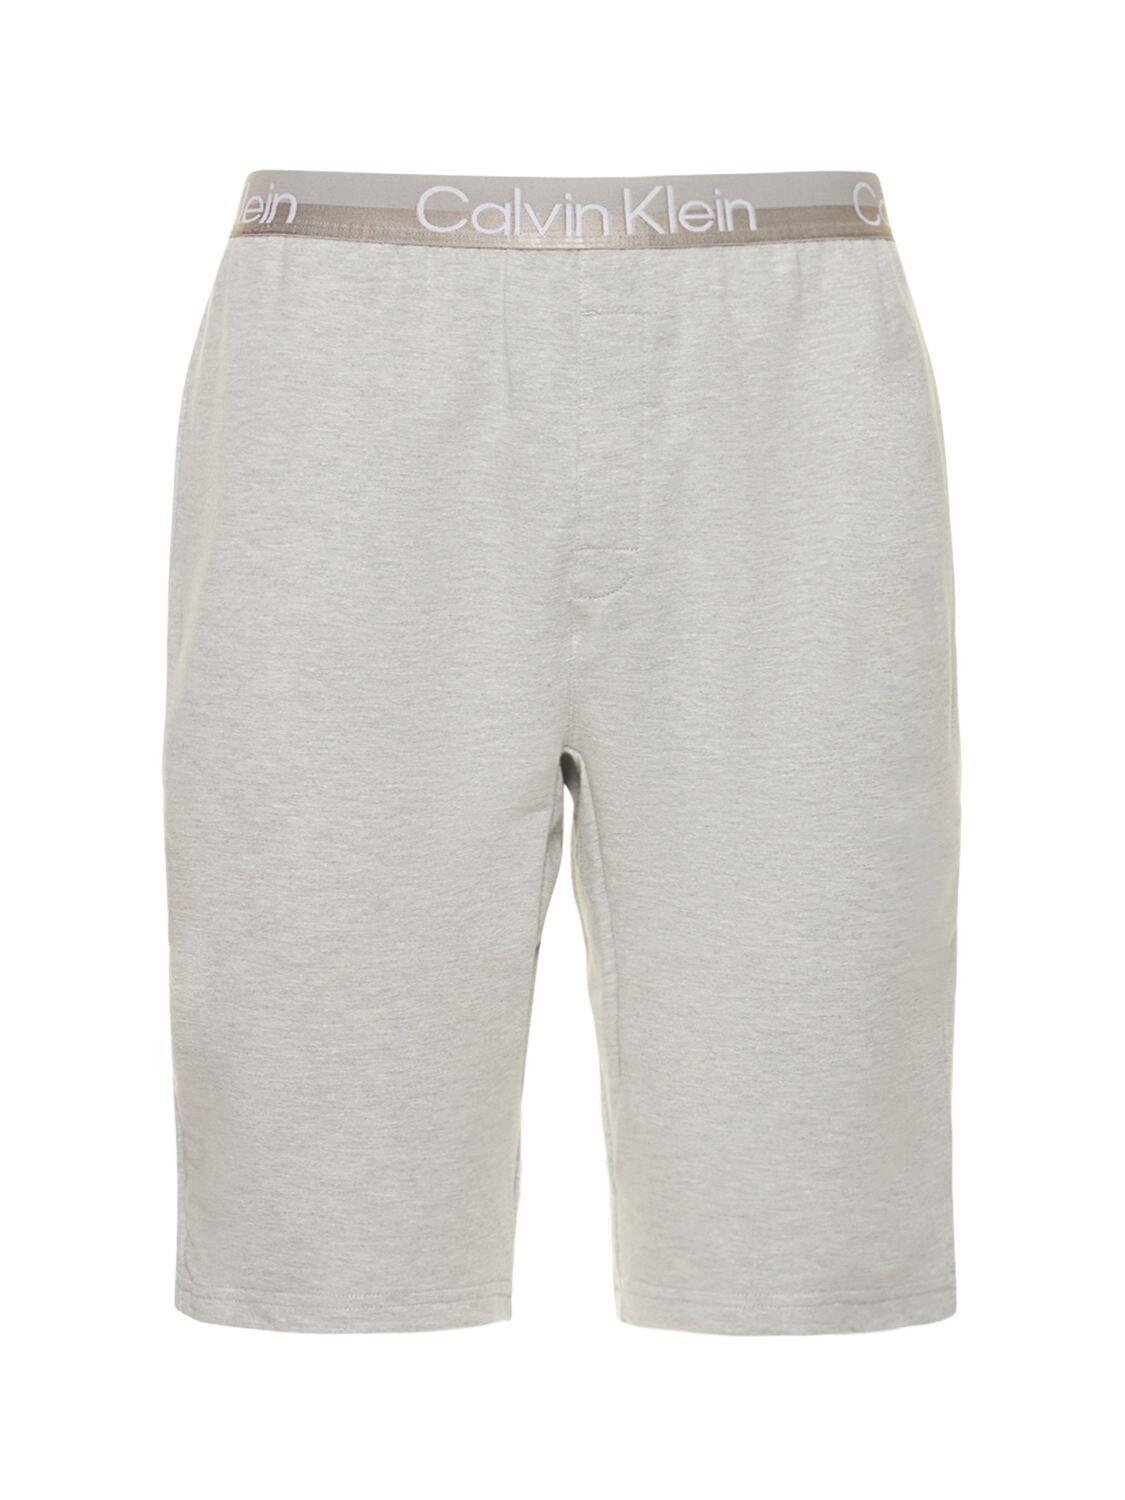 Logo Band Cotton Blend Sleep Shorts - CALVIN KLEIN UNDERWEAR - Modalova